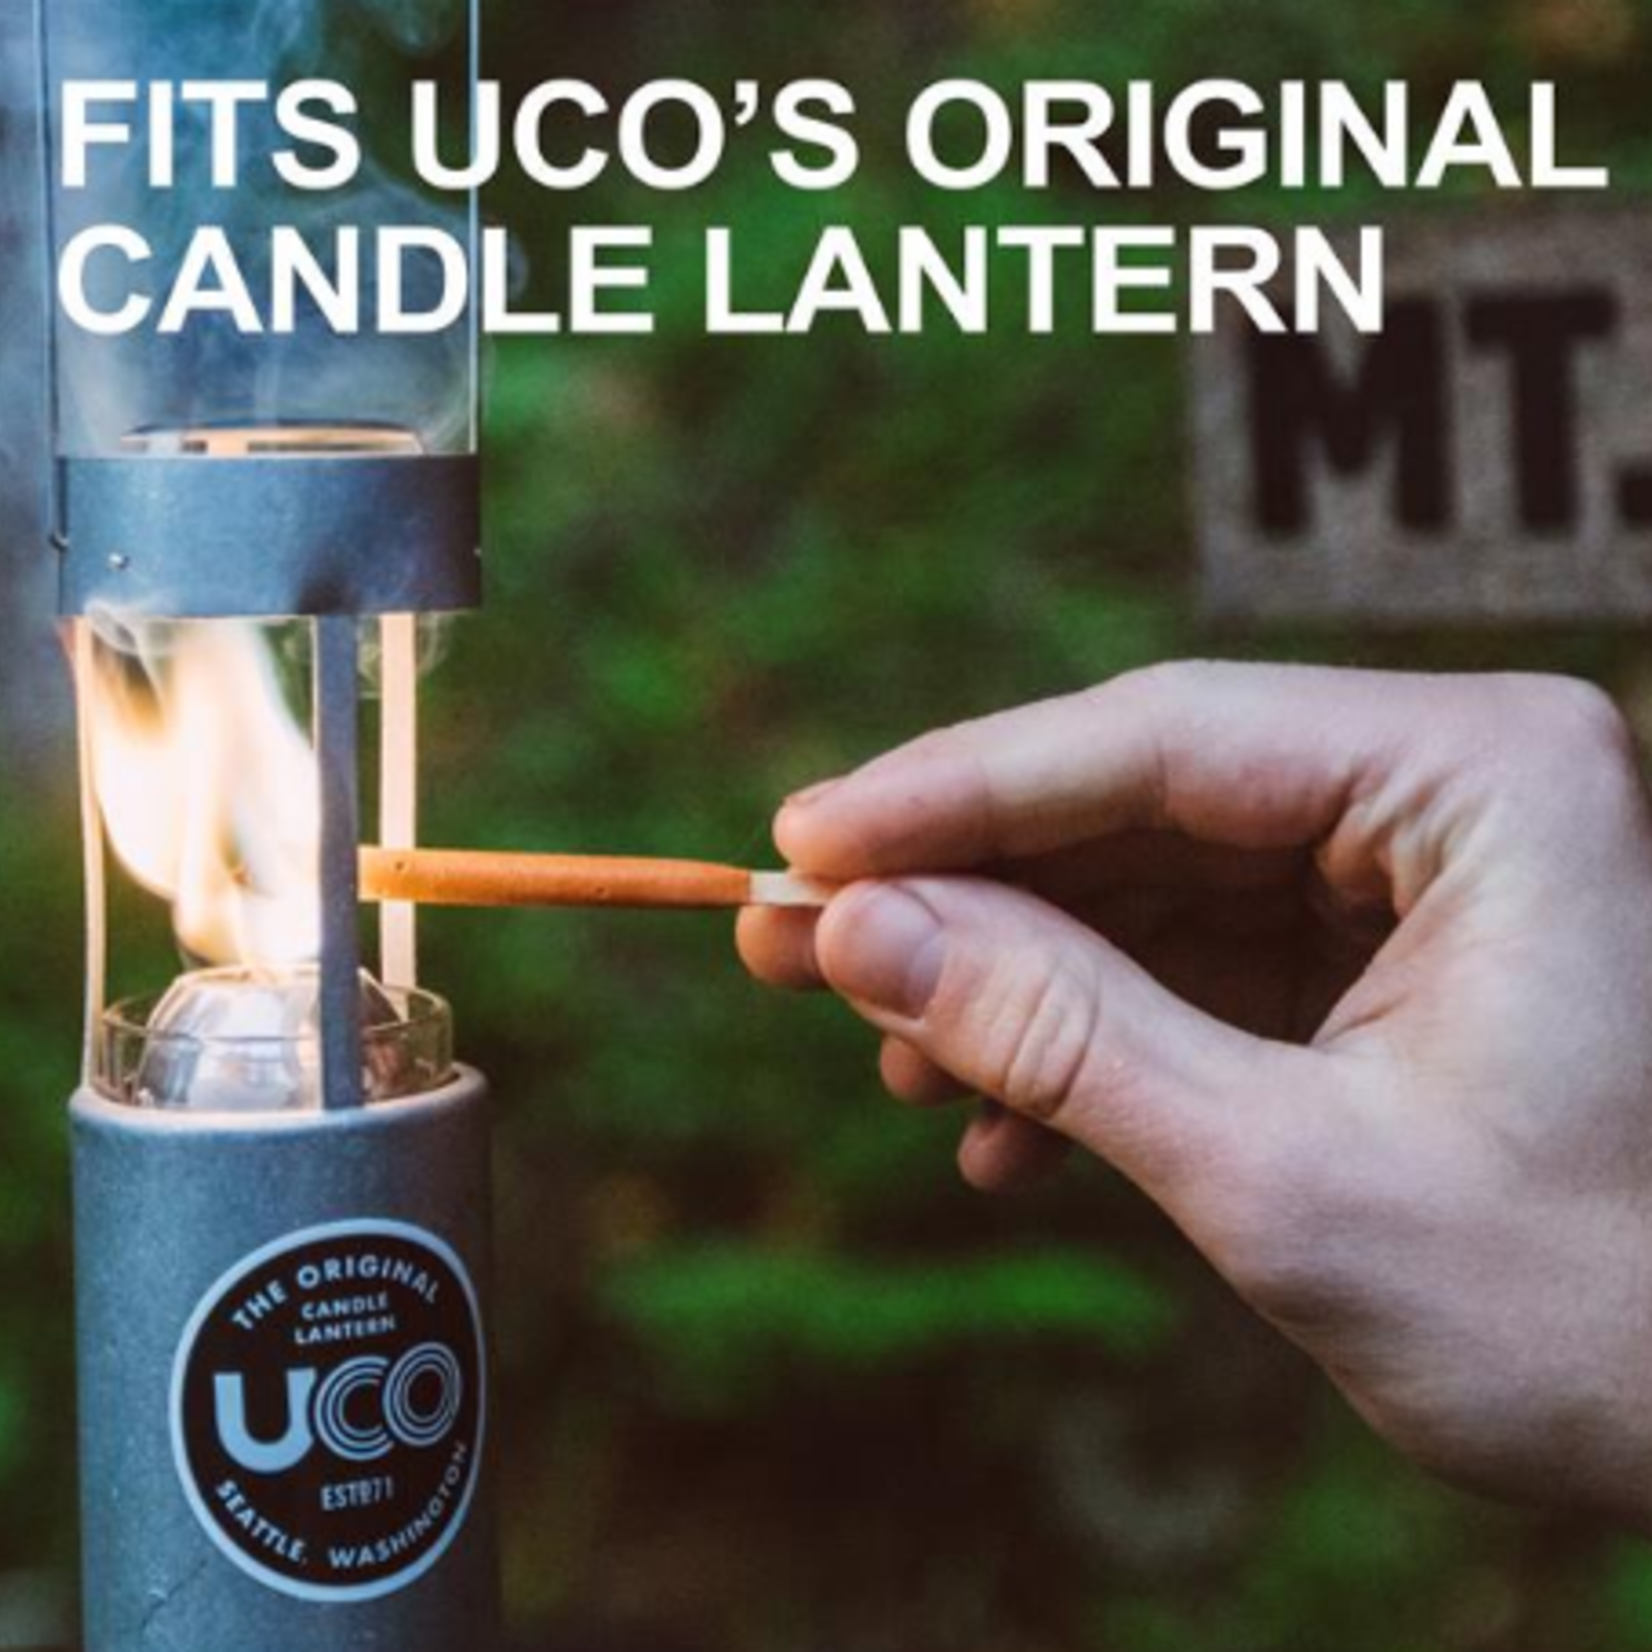 UCO Chandelle pour lanterne UCO original